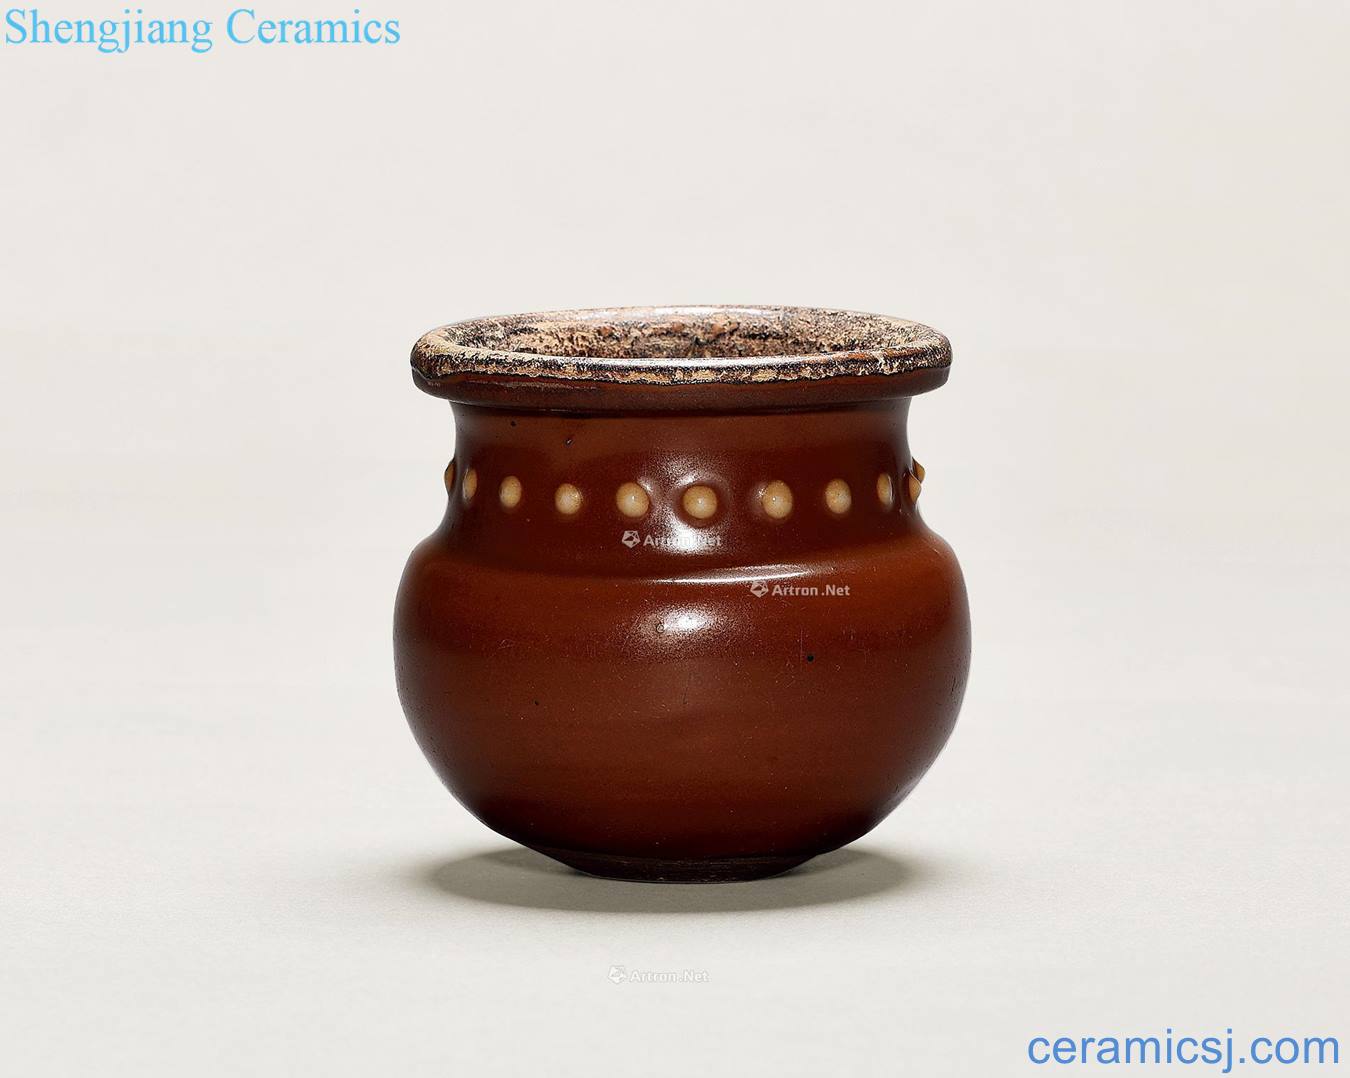 The song dynasty Ganzhou kiln sauce glaze milk cans